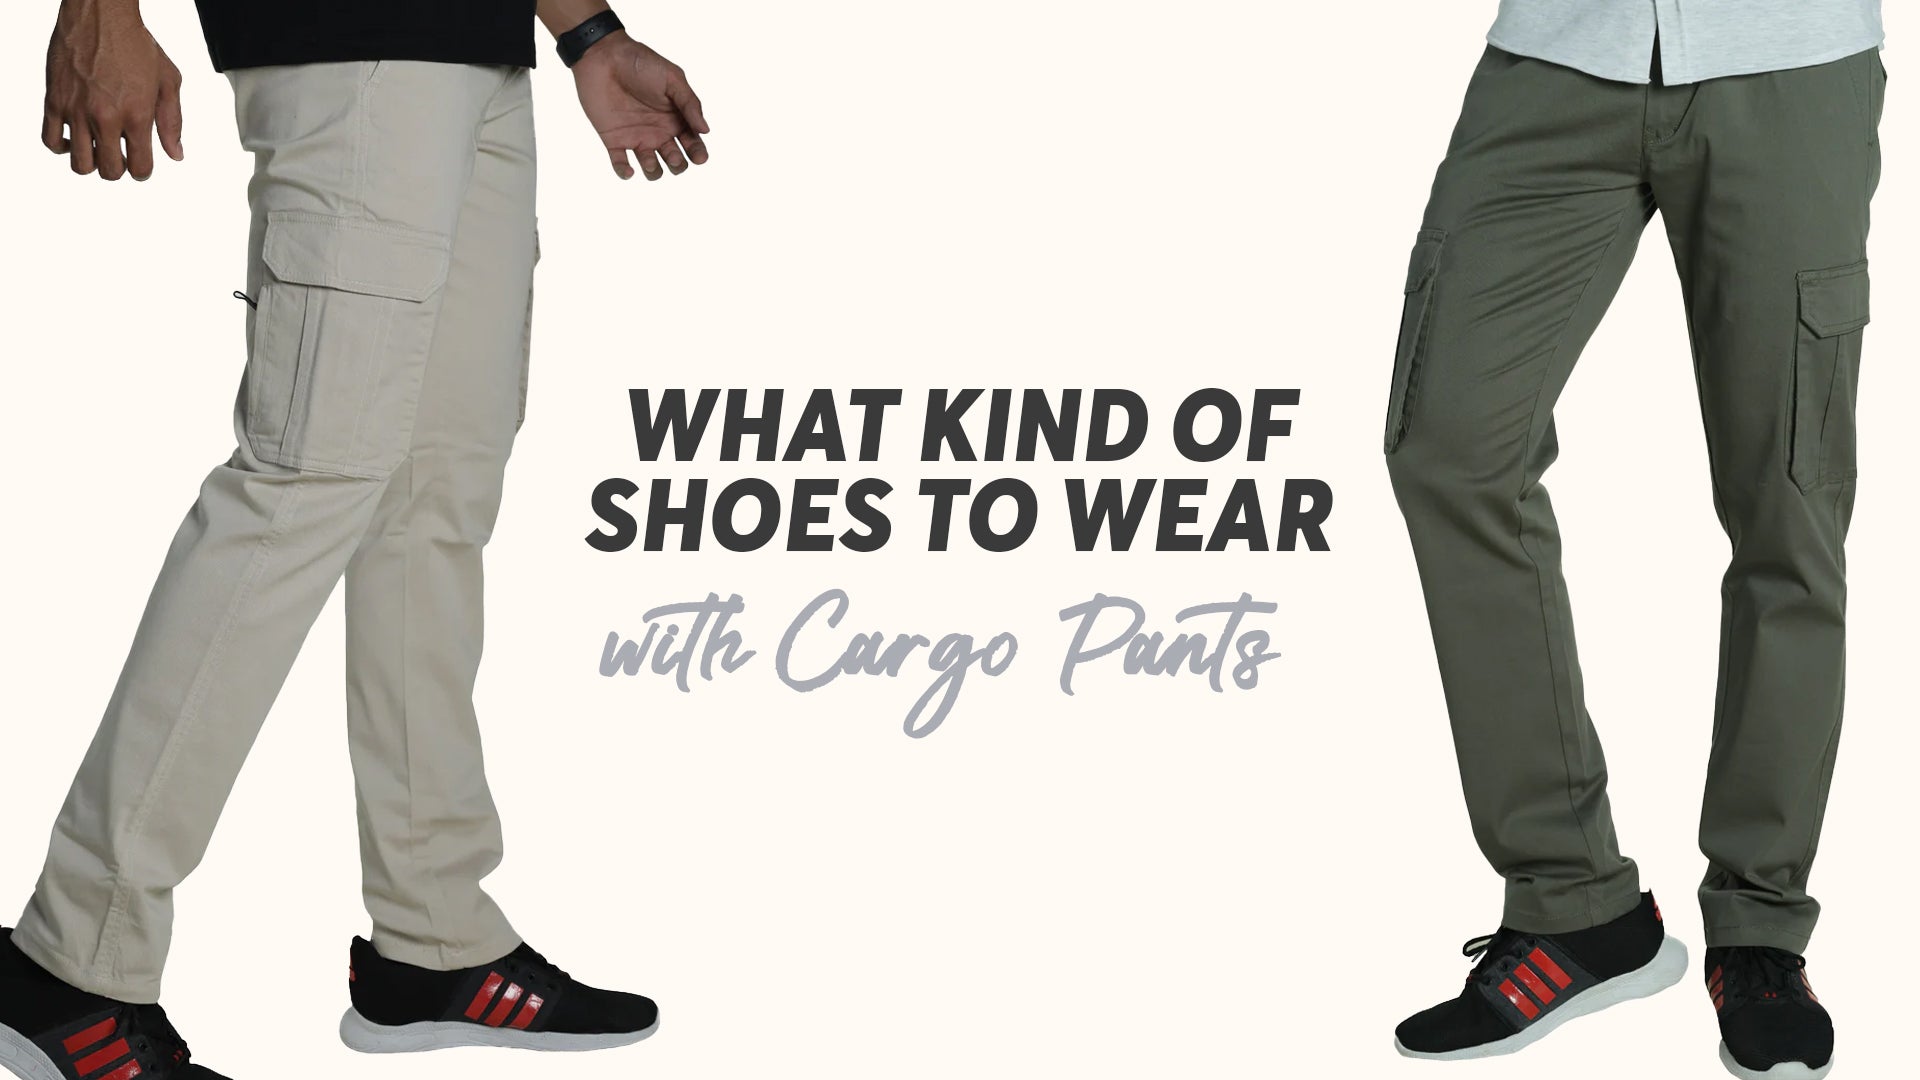 Black Cargo Pants for Women: 6 Stylish Black Cargo Pants for Women for a  Chic Casual Look - The Economic Times